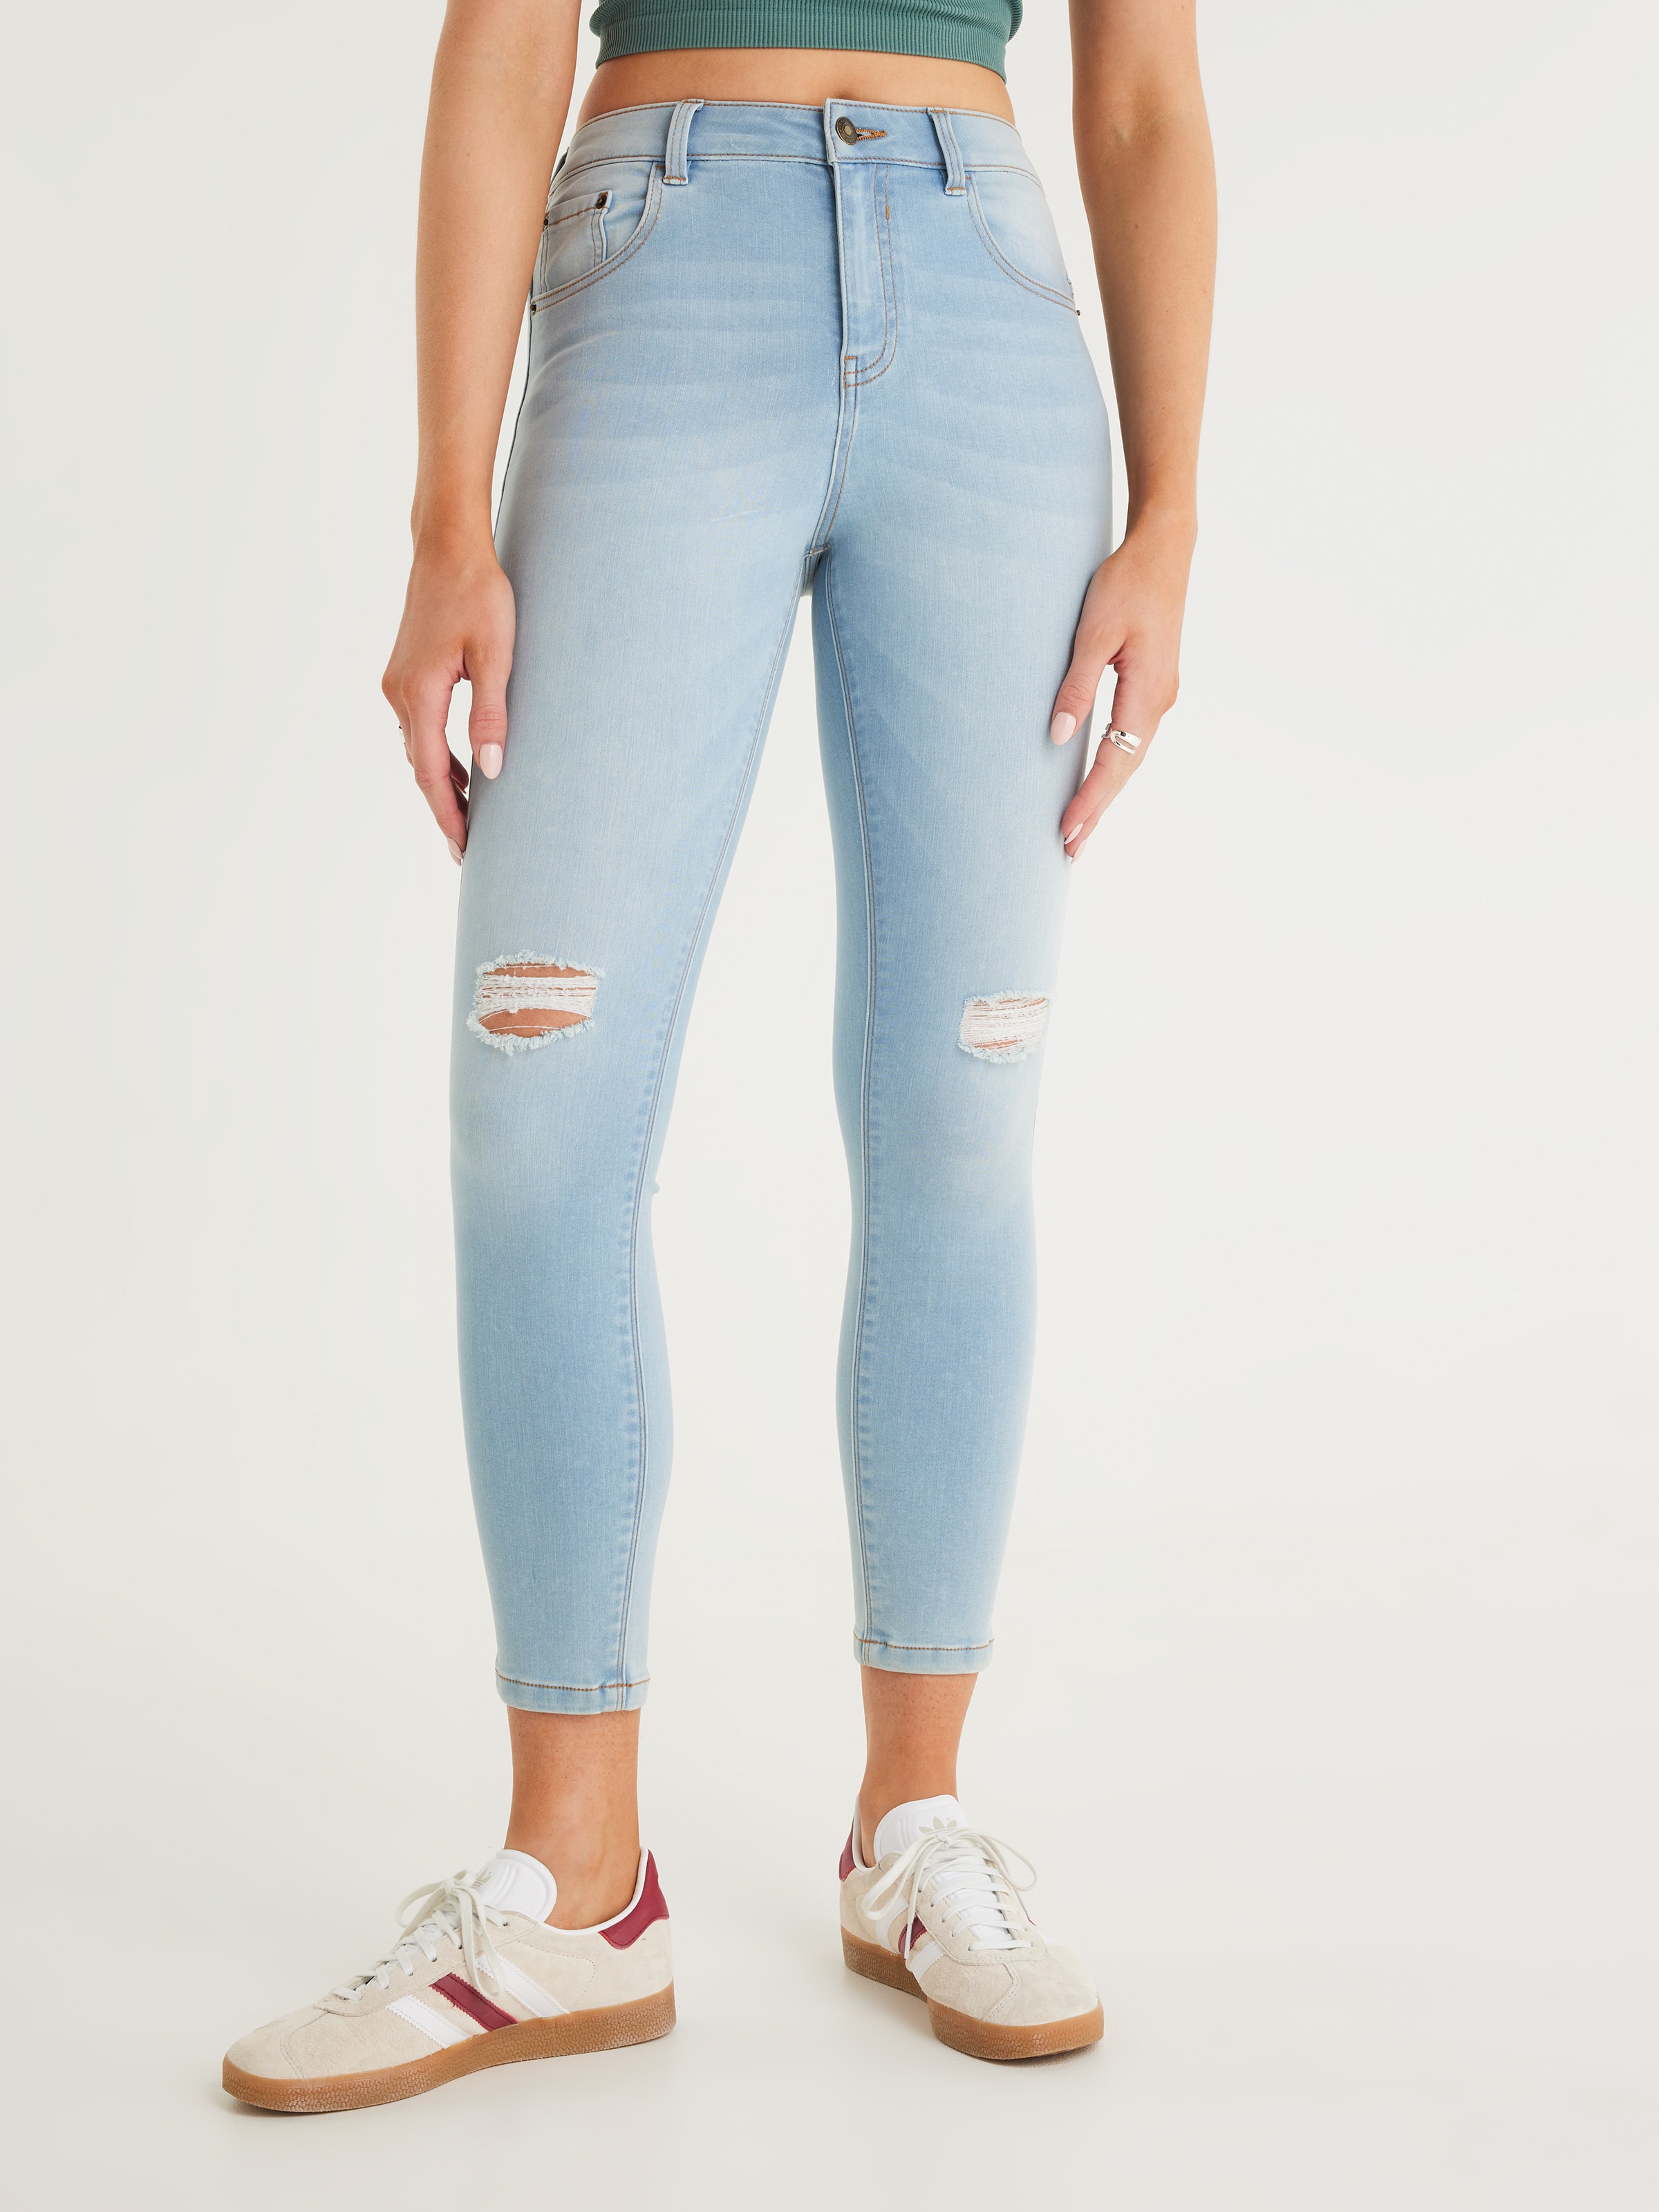 Jeans For Women - Denim Pants, Skinny Jeans & More | Dotti